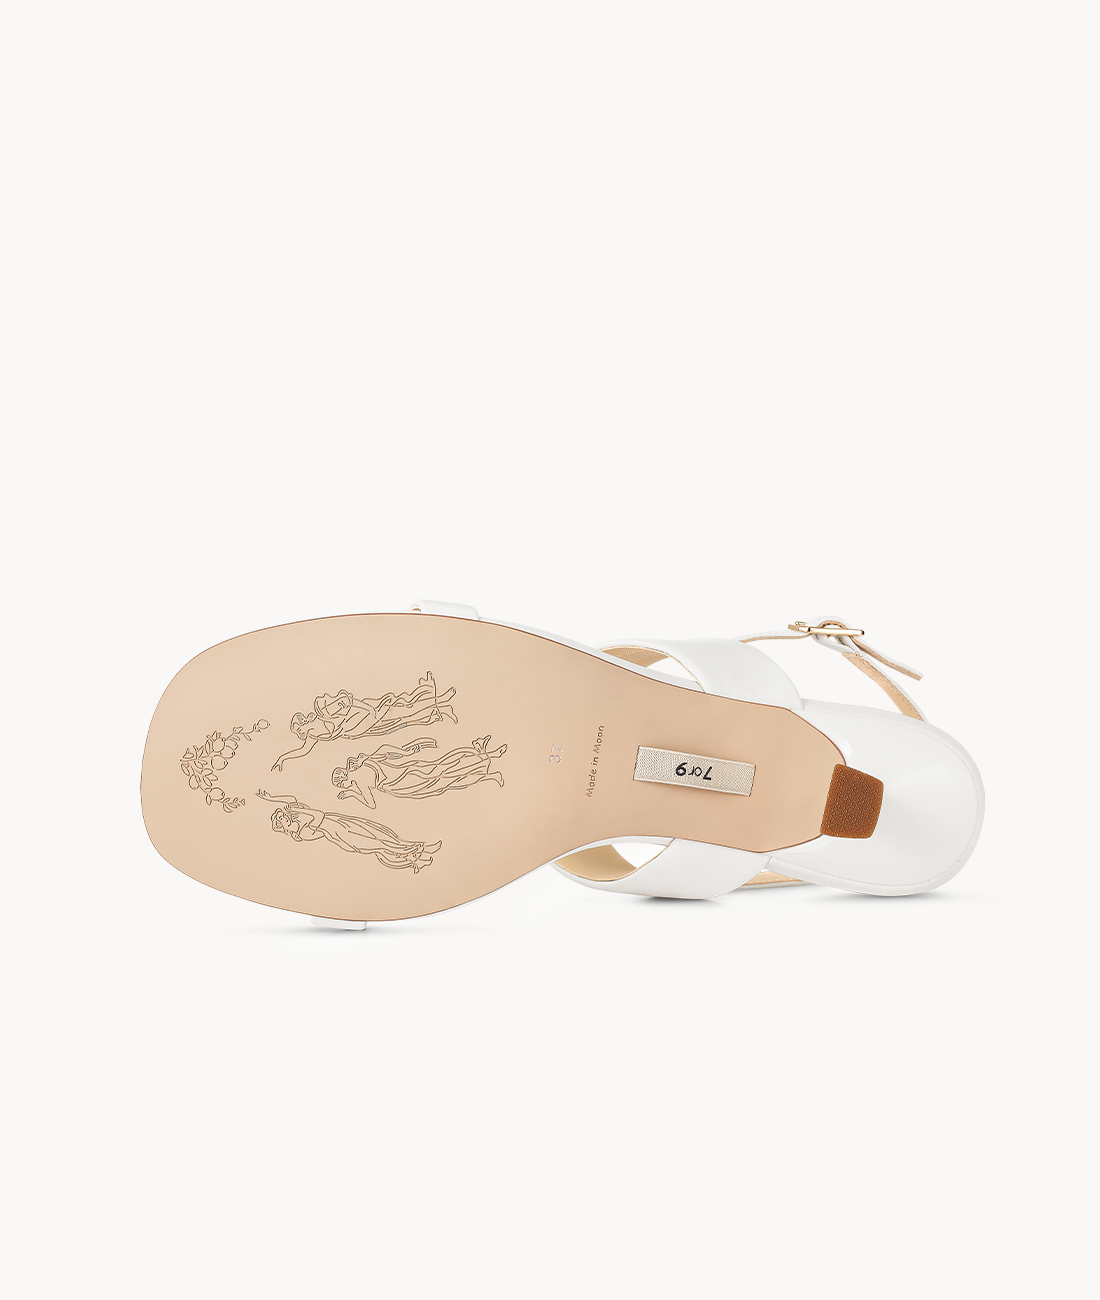 7or9 - White Cardamom - Sandals